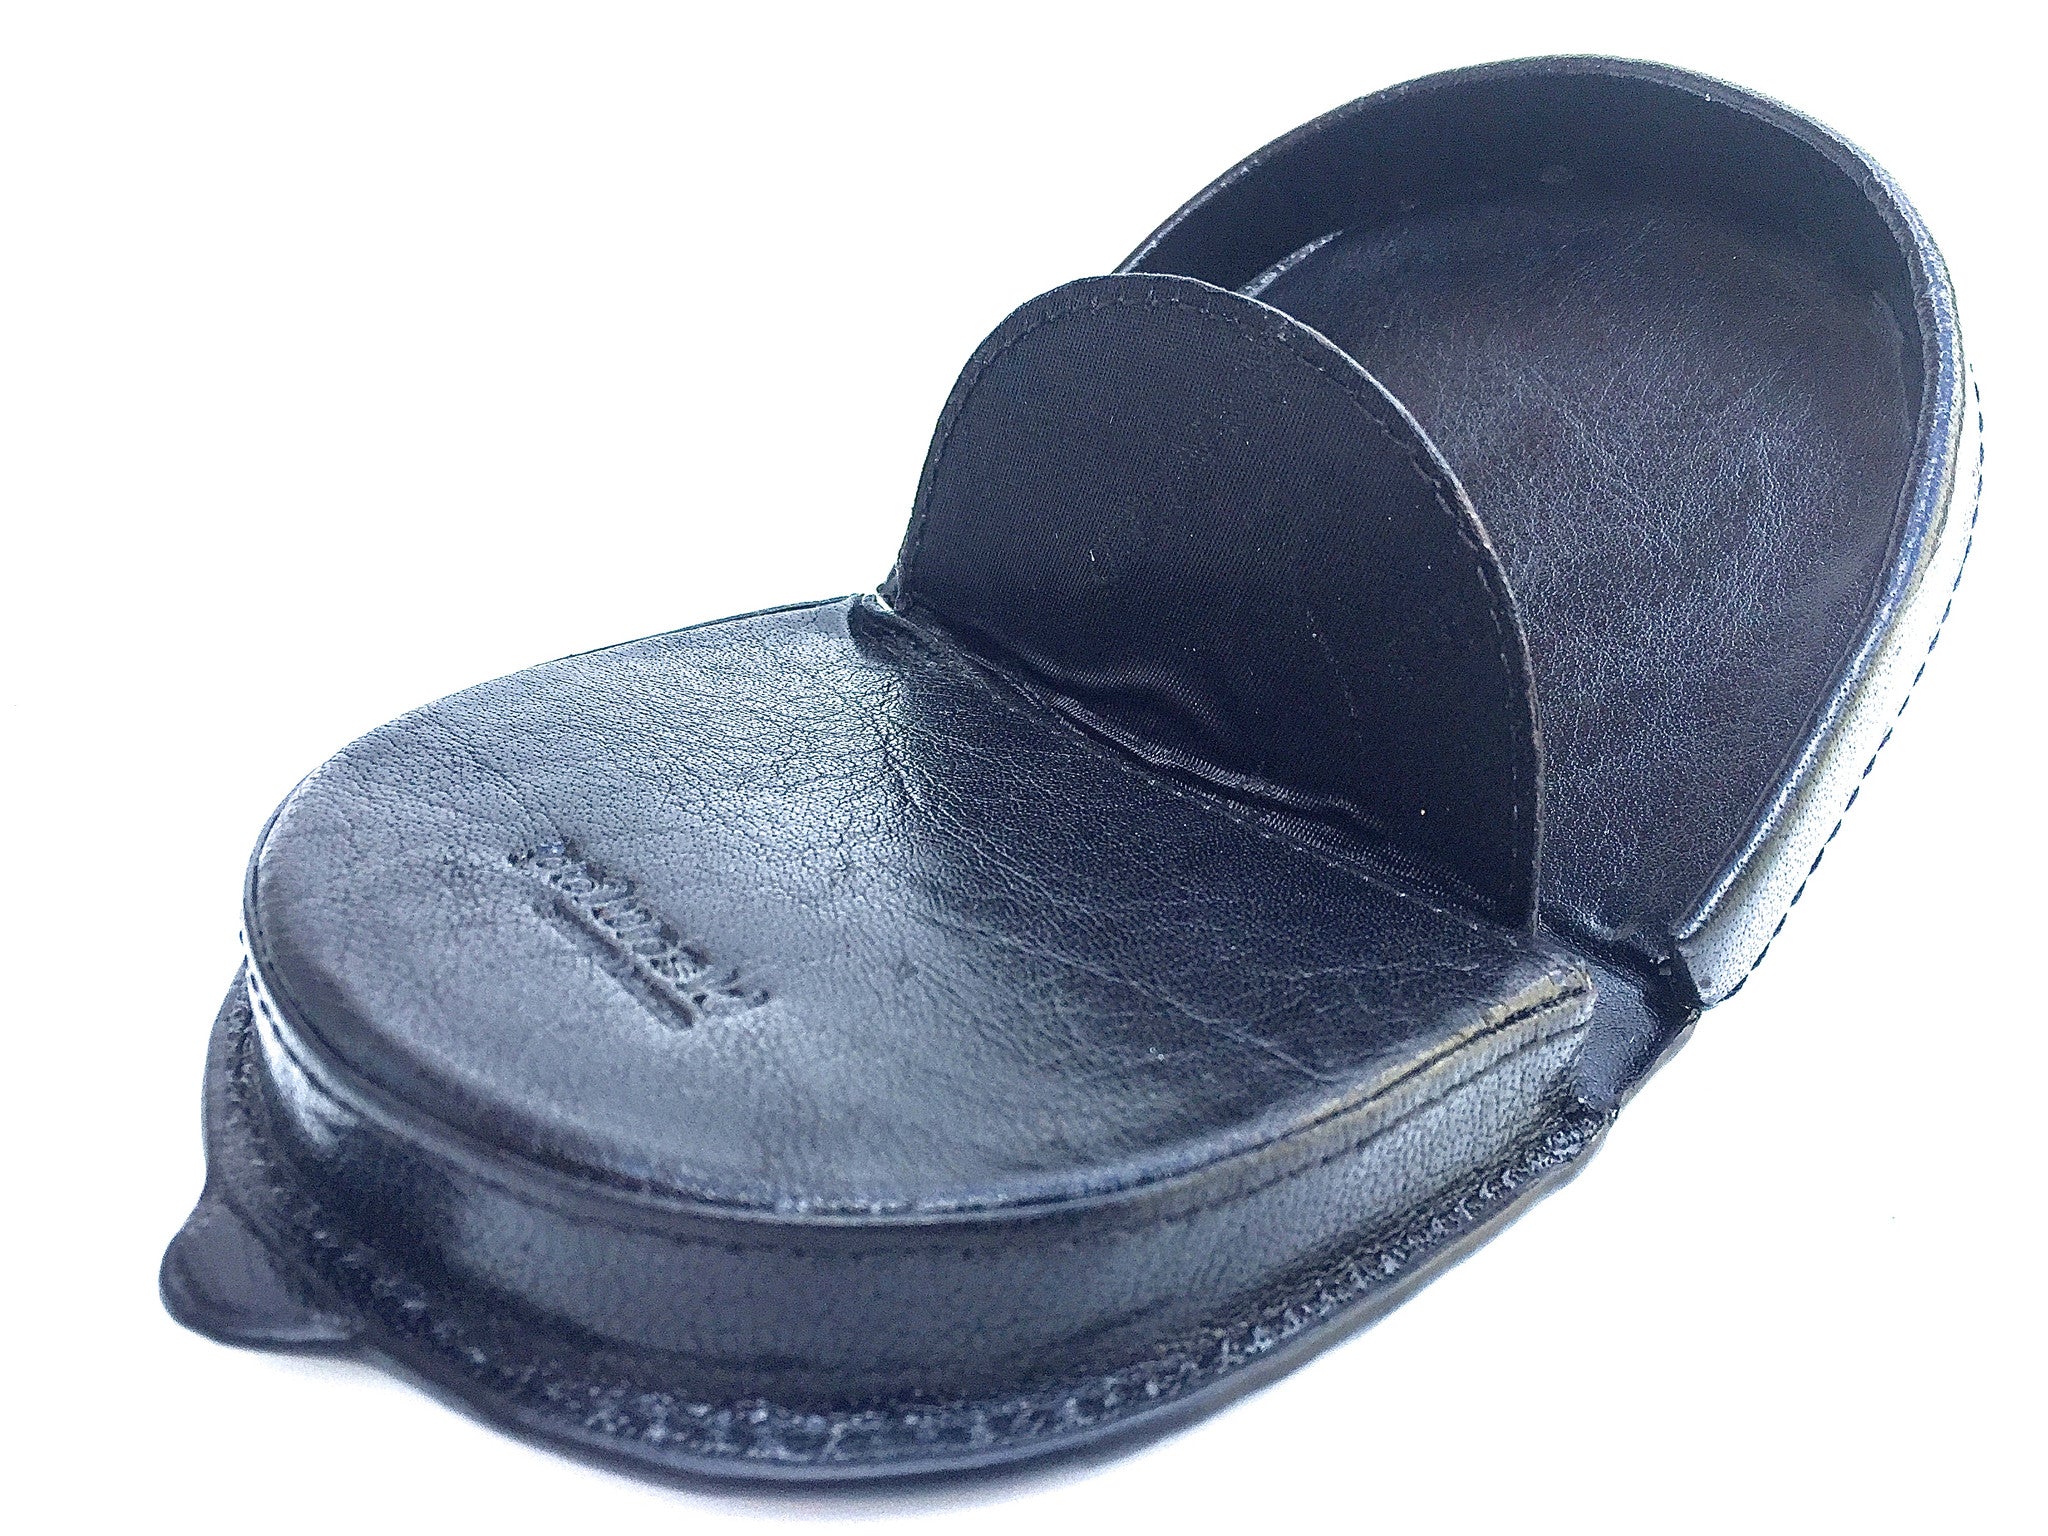 Mens Leather Horseshoe Coin Tray Purse In Black By Golunski - Baked Apple WM Ltd